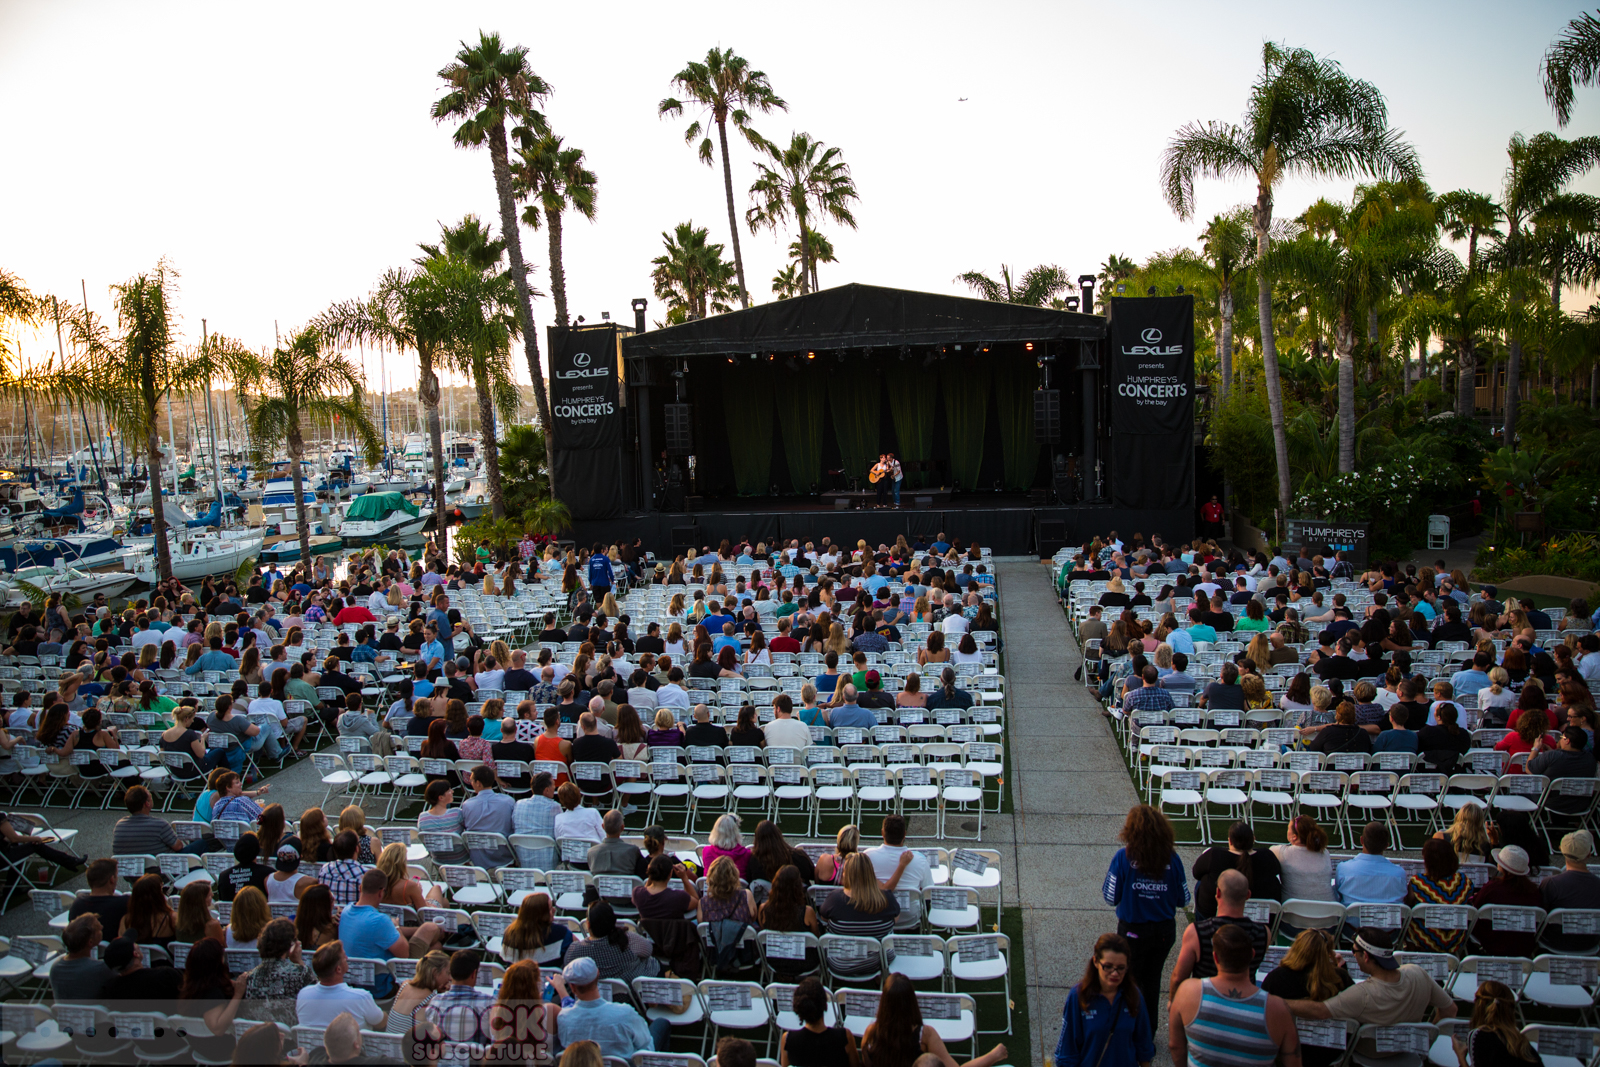 Tori-Amos-Concert-Review-Unrepentant-Geraldines-Tour-2014-San-Diego-Humphreys-Concerts-By-The-Bay-Outdoor-Amphiteatre-06.jpg